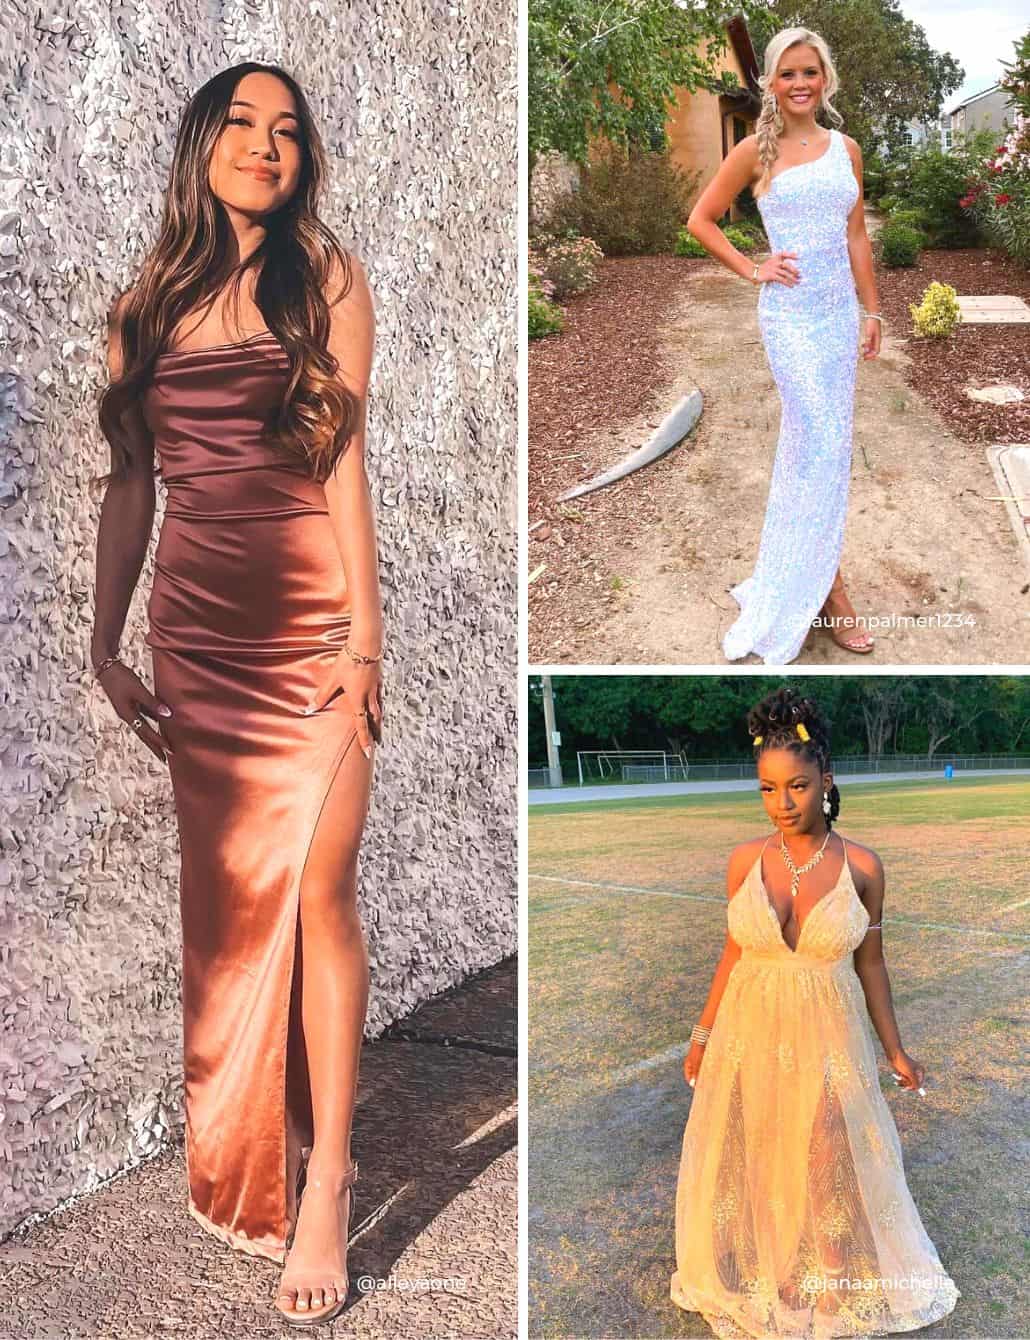 types of prom dresses